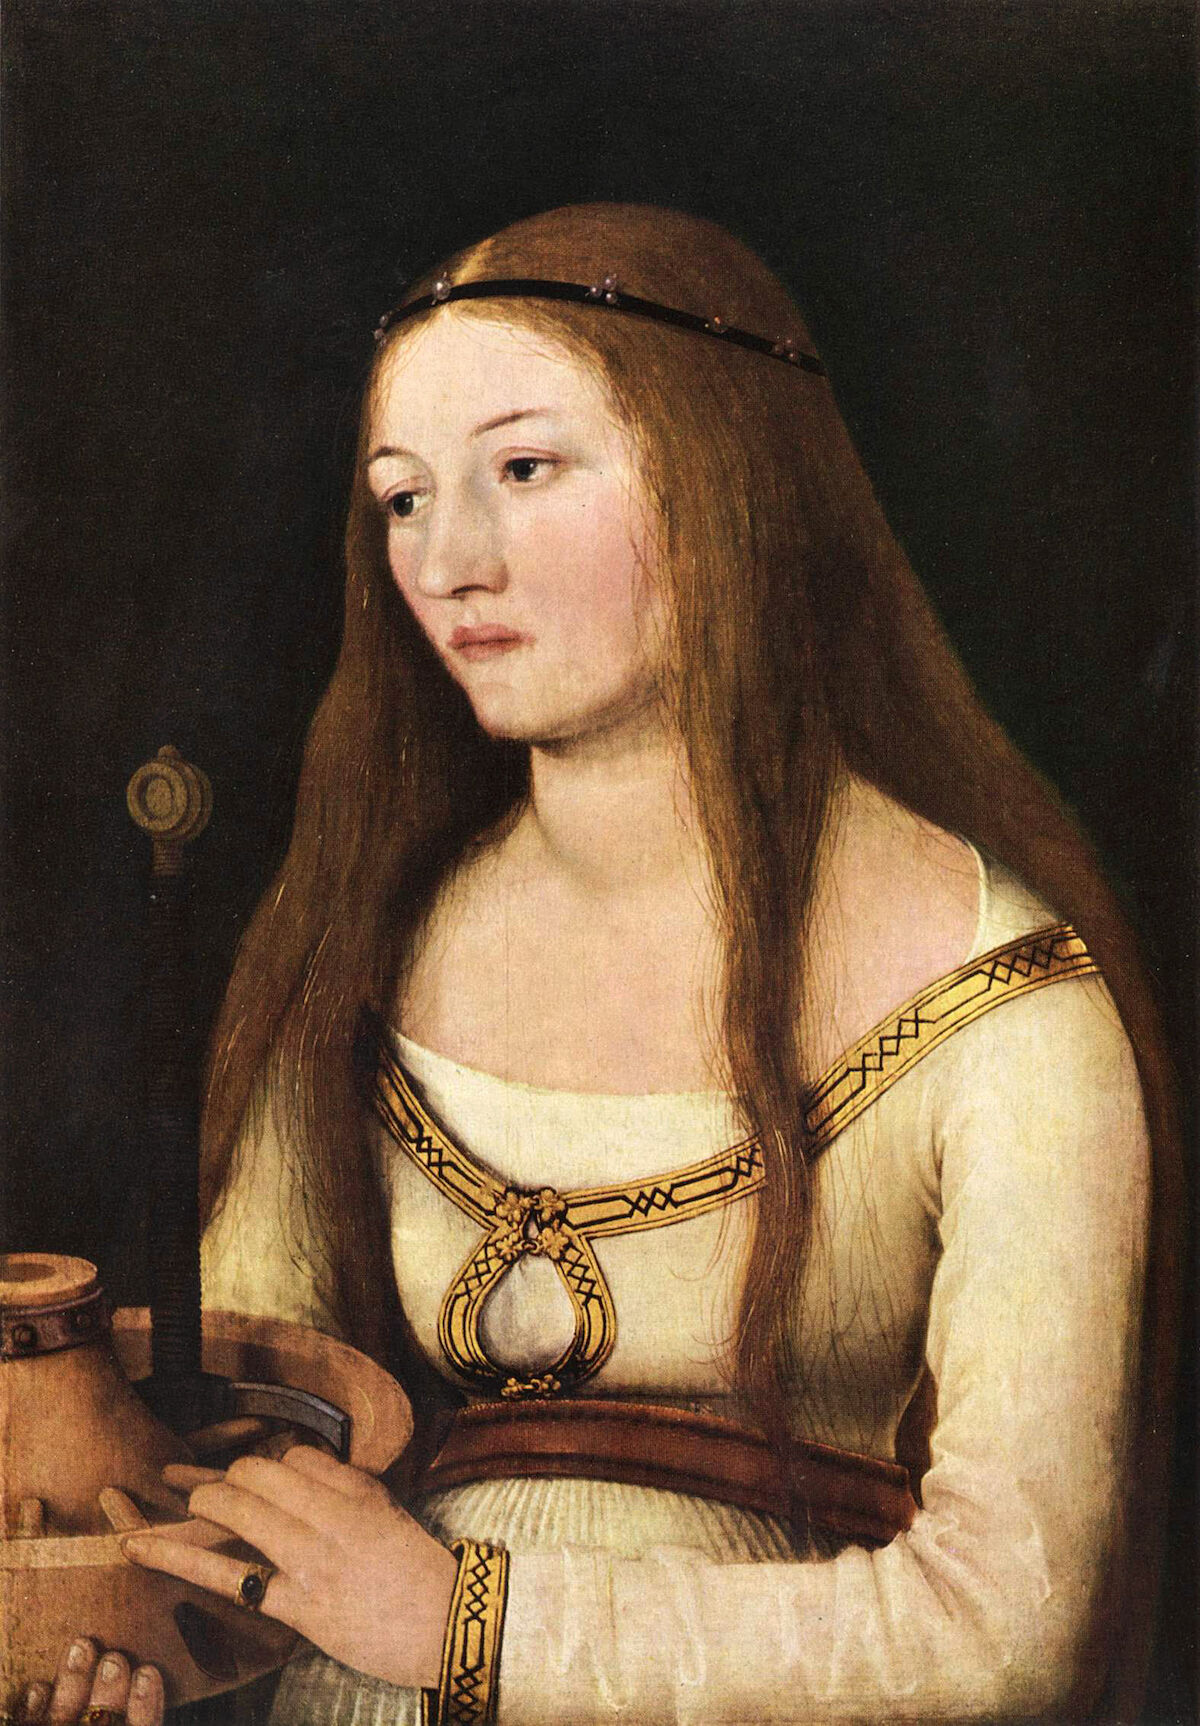 Hans Holbein the Elder portrait of Saint Catherine (1510). Via Wikimedia Commons.